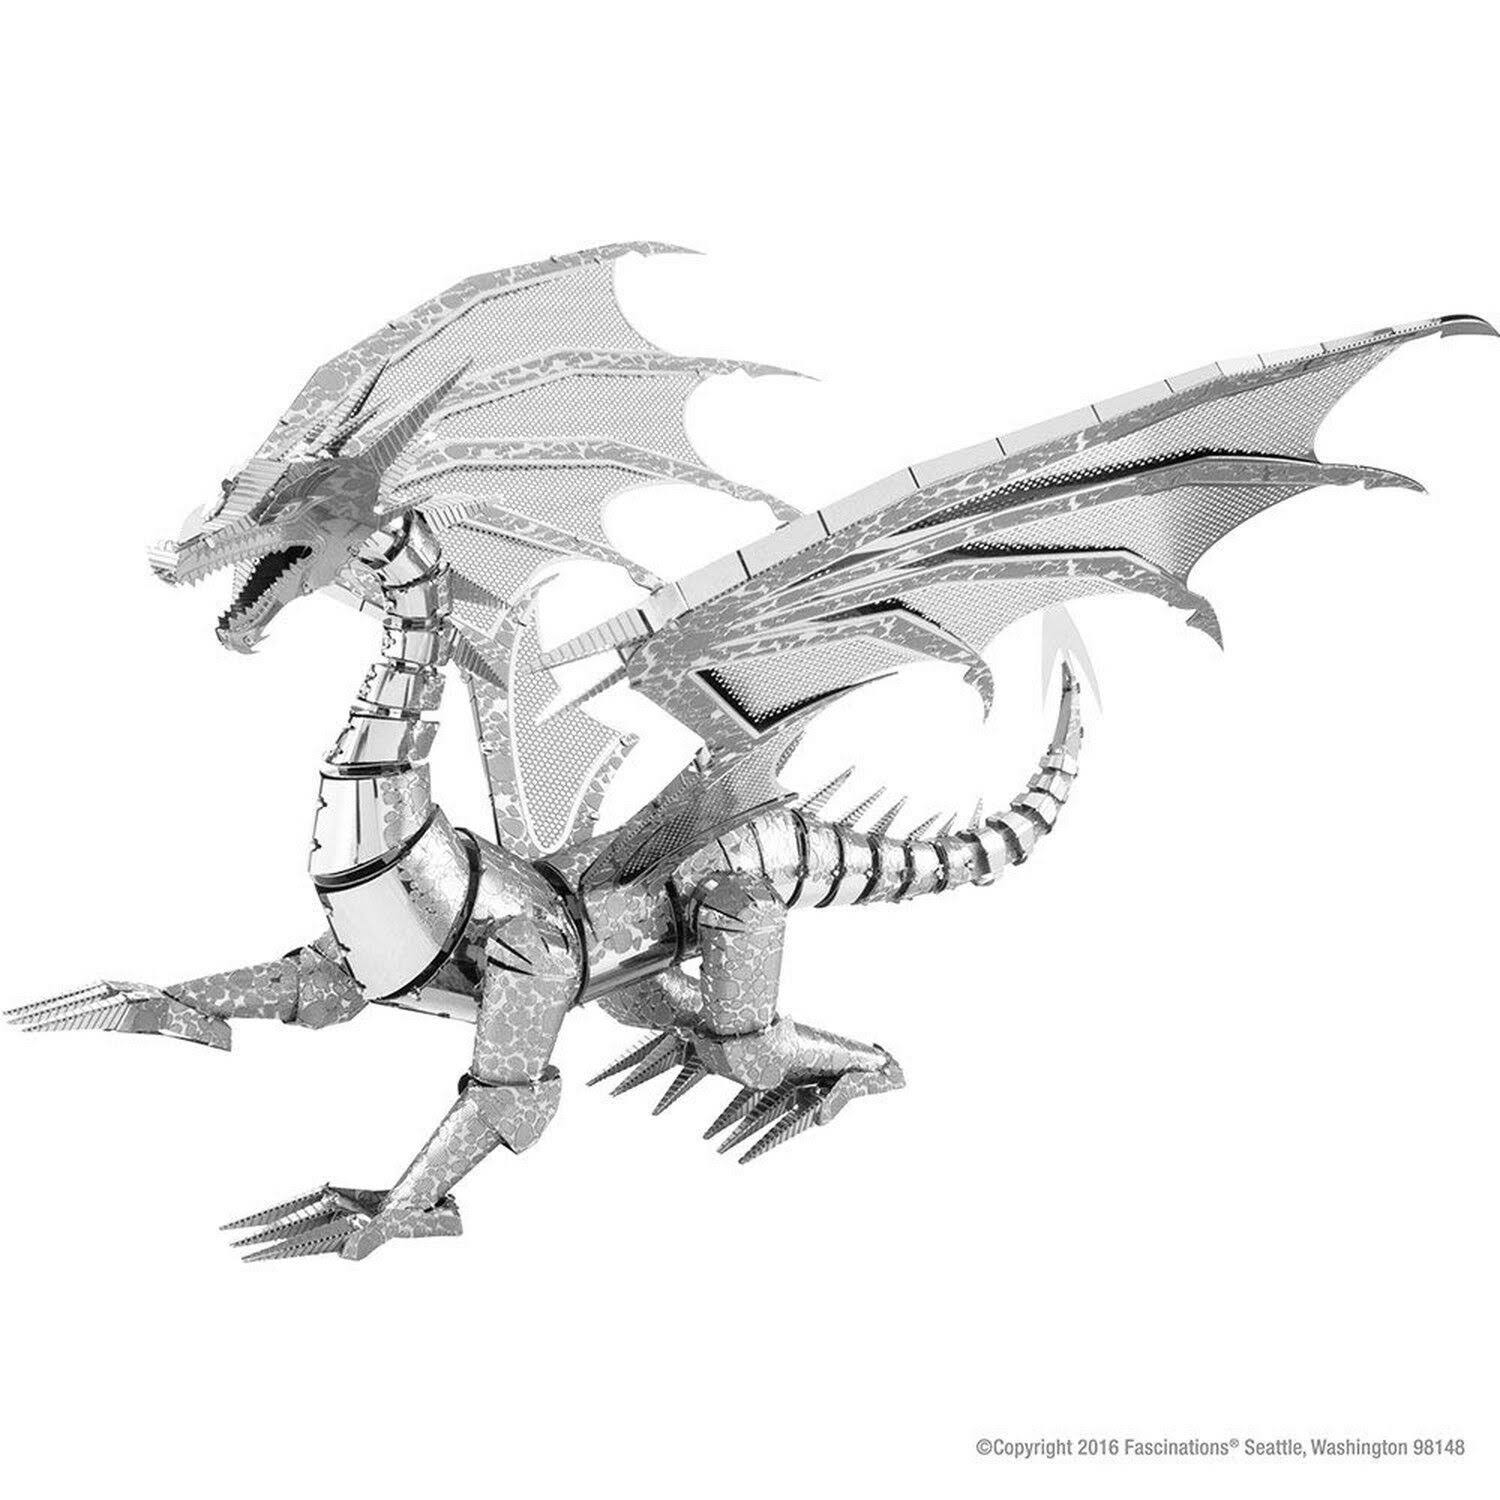 Fascinations Iconx Dragon Metal Earth 3d Laser Cut Steel Model Kit - Silver